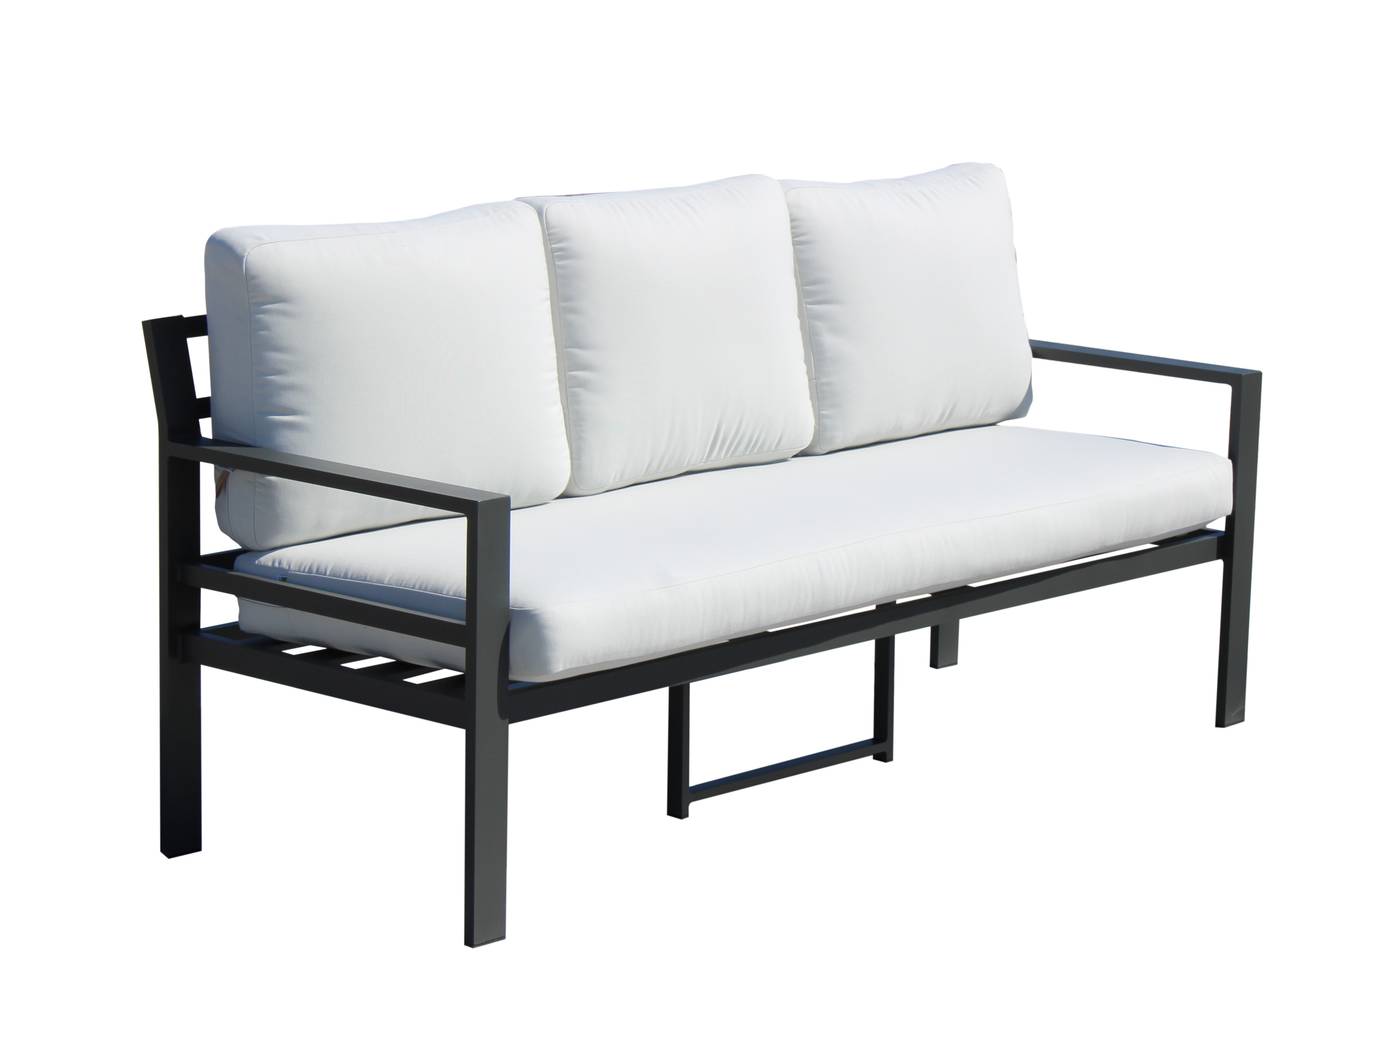 Set Aluminio Luxe Glembor-10 - Conjunto aluminio: 1 sofá 3 plazas + 2 sillones + 1 mesa de centro + 2 reposapiés. Disponible en color blanco o antracita.